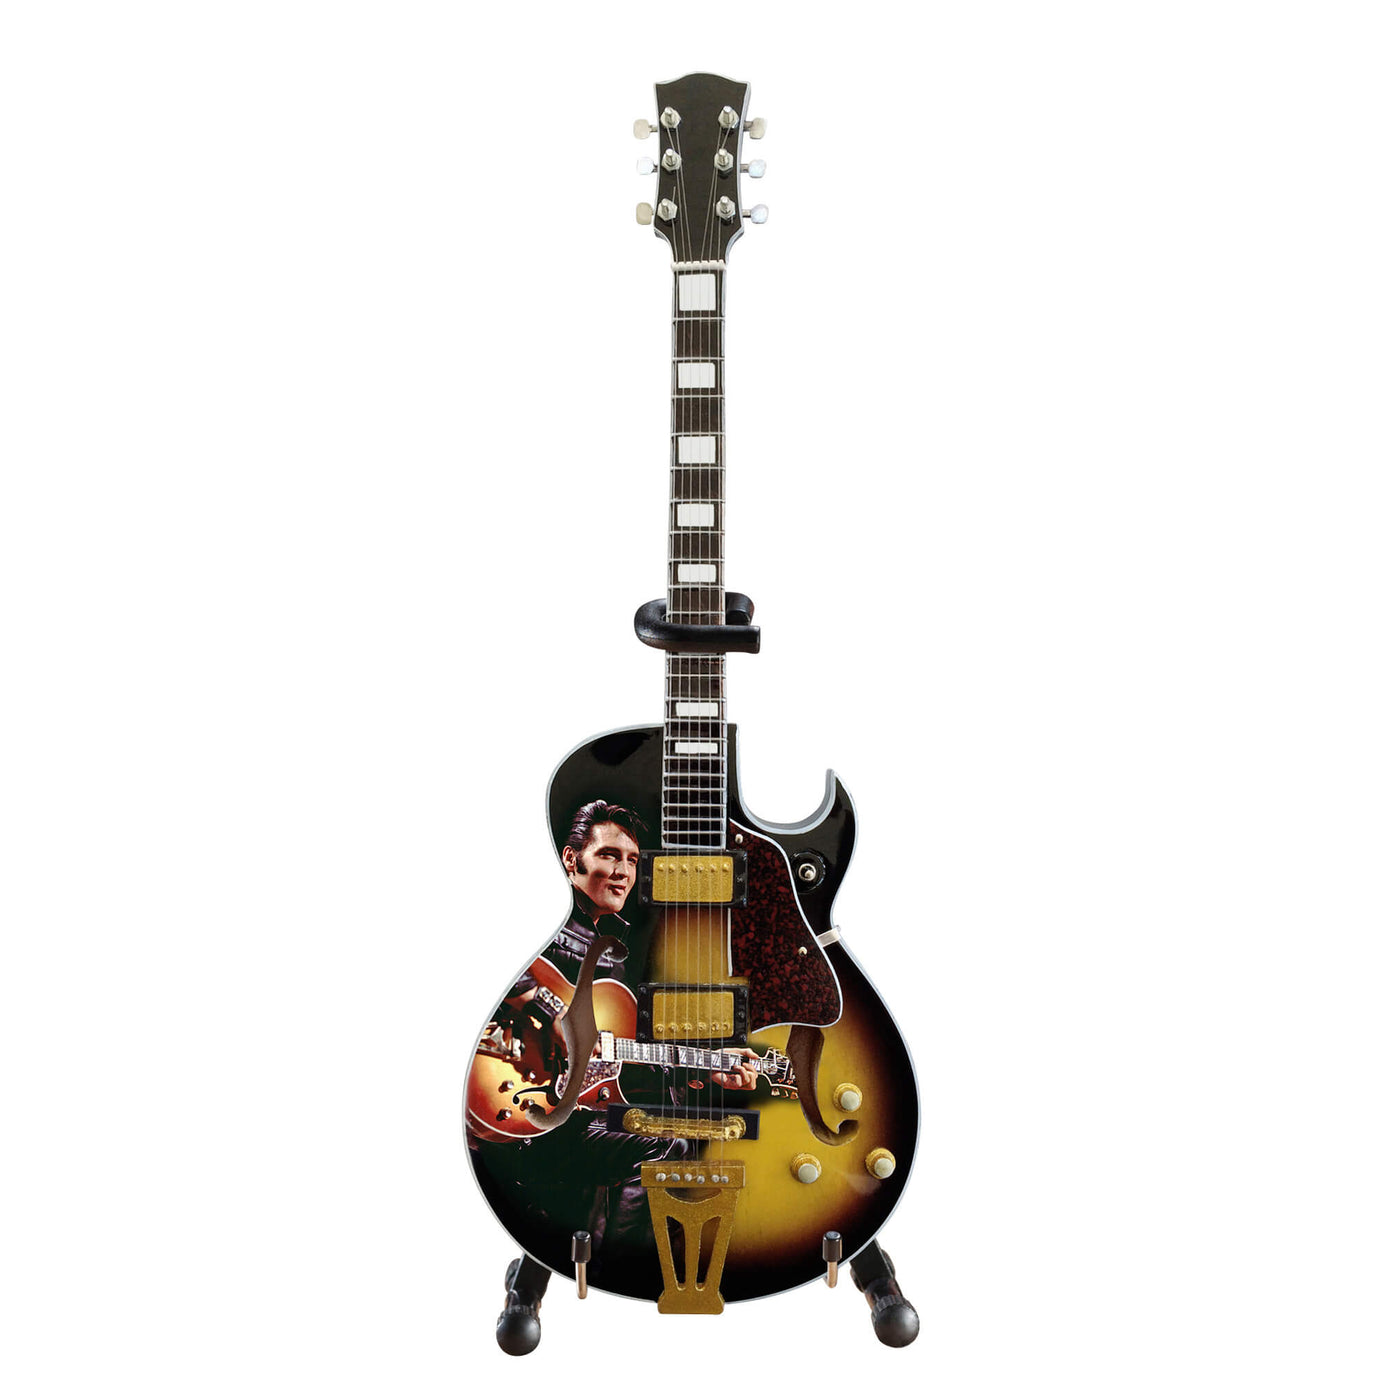 Daniel Steiger Elvis Presley  '68 Special Hollow Body Guitar Model